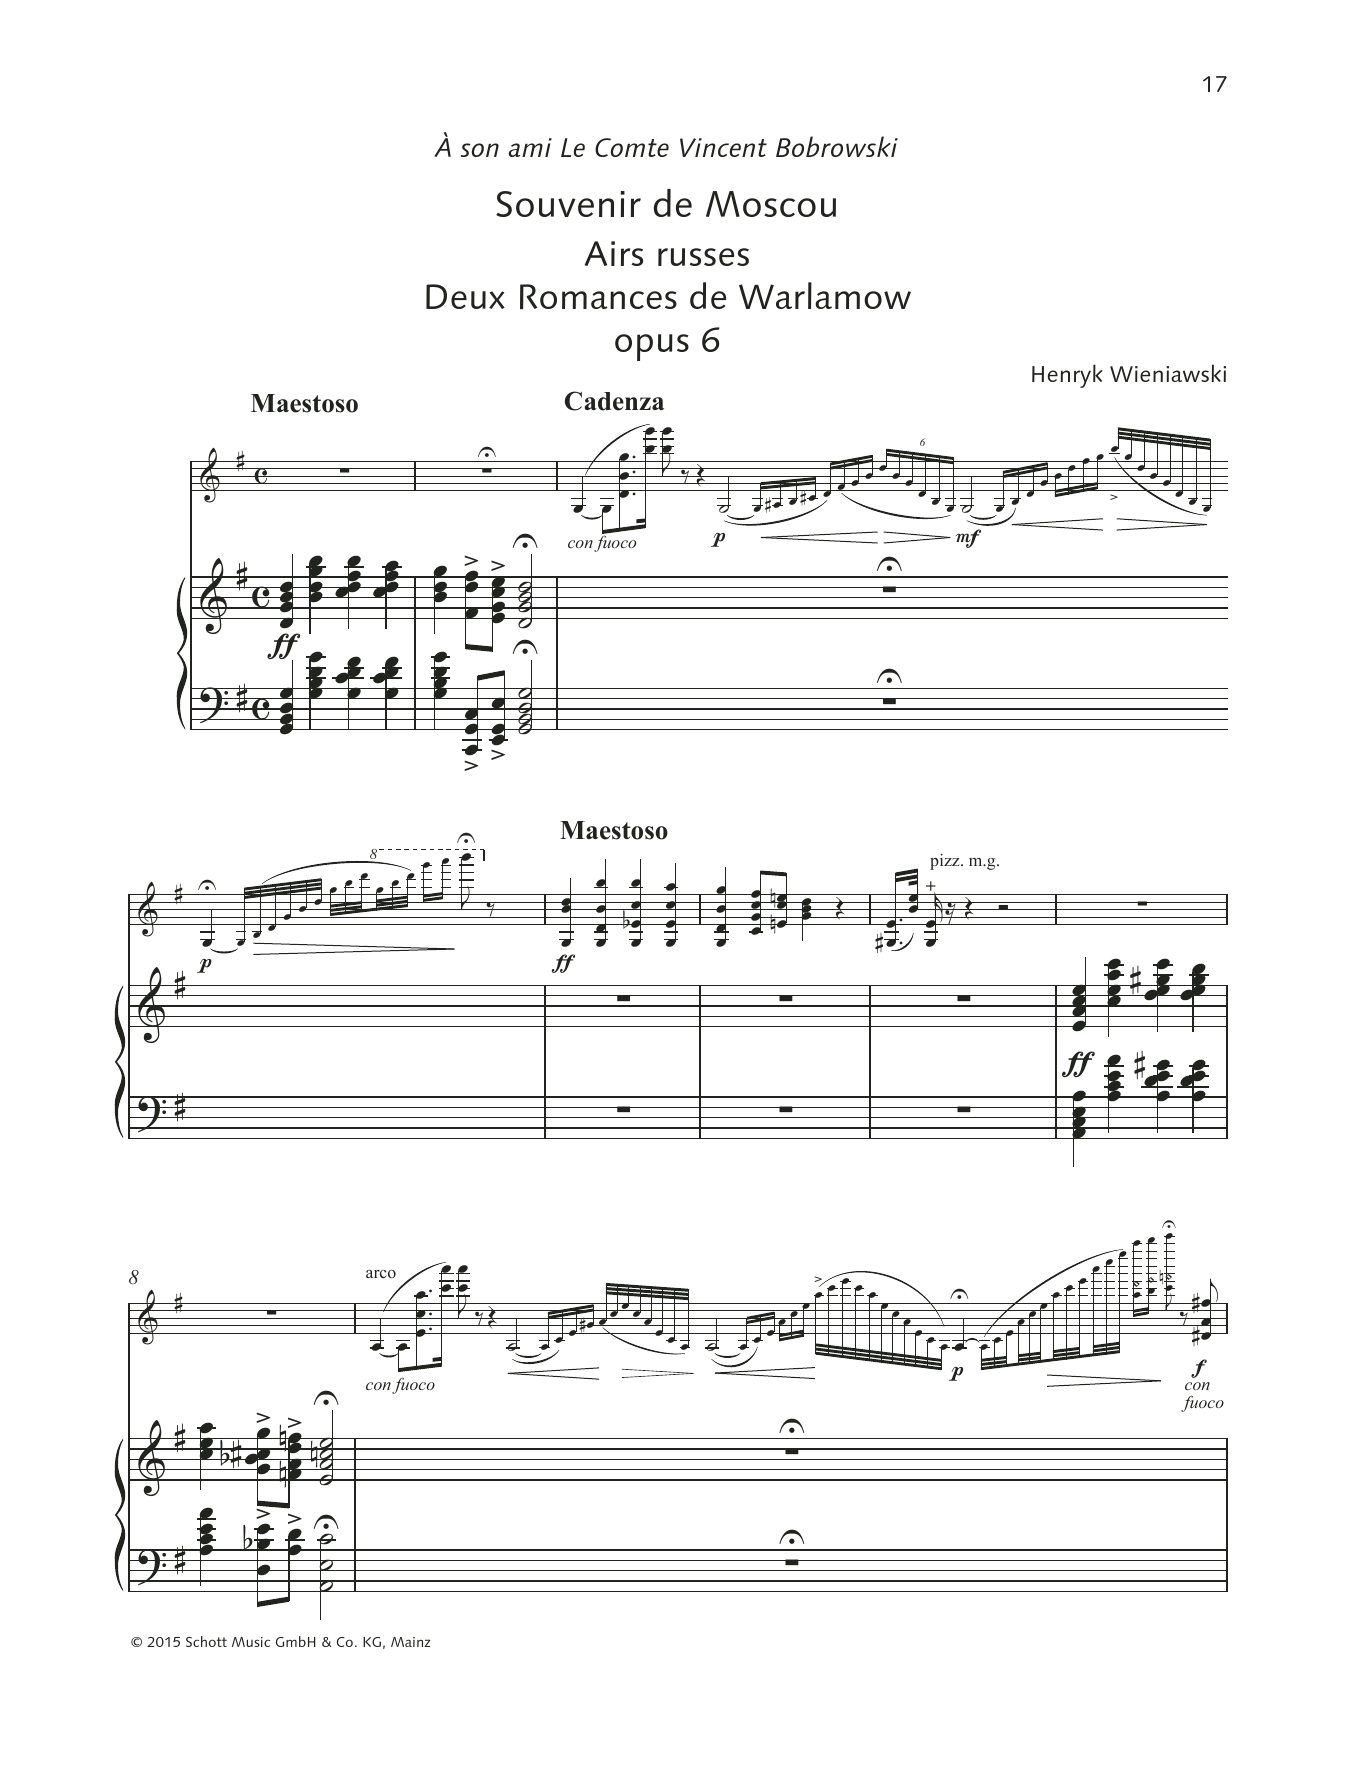 Download Henryk Wieniawski Souvenir de Moscou/Airs russes Sheet Music